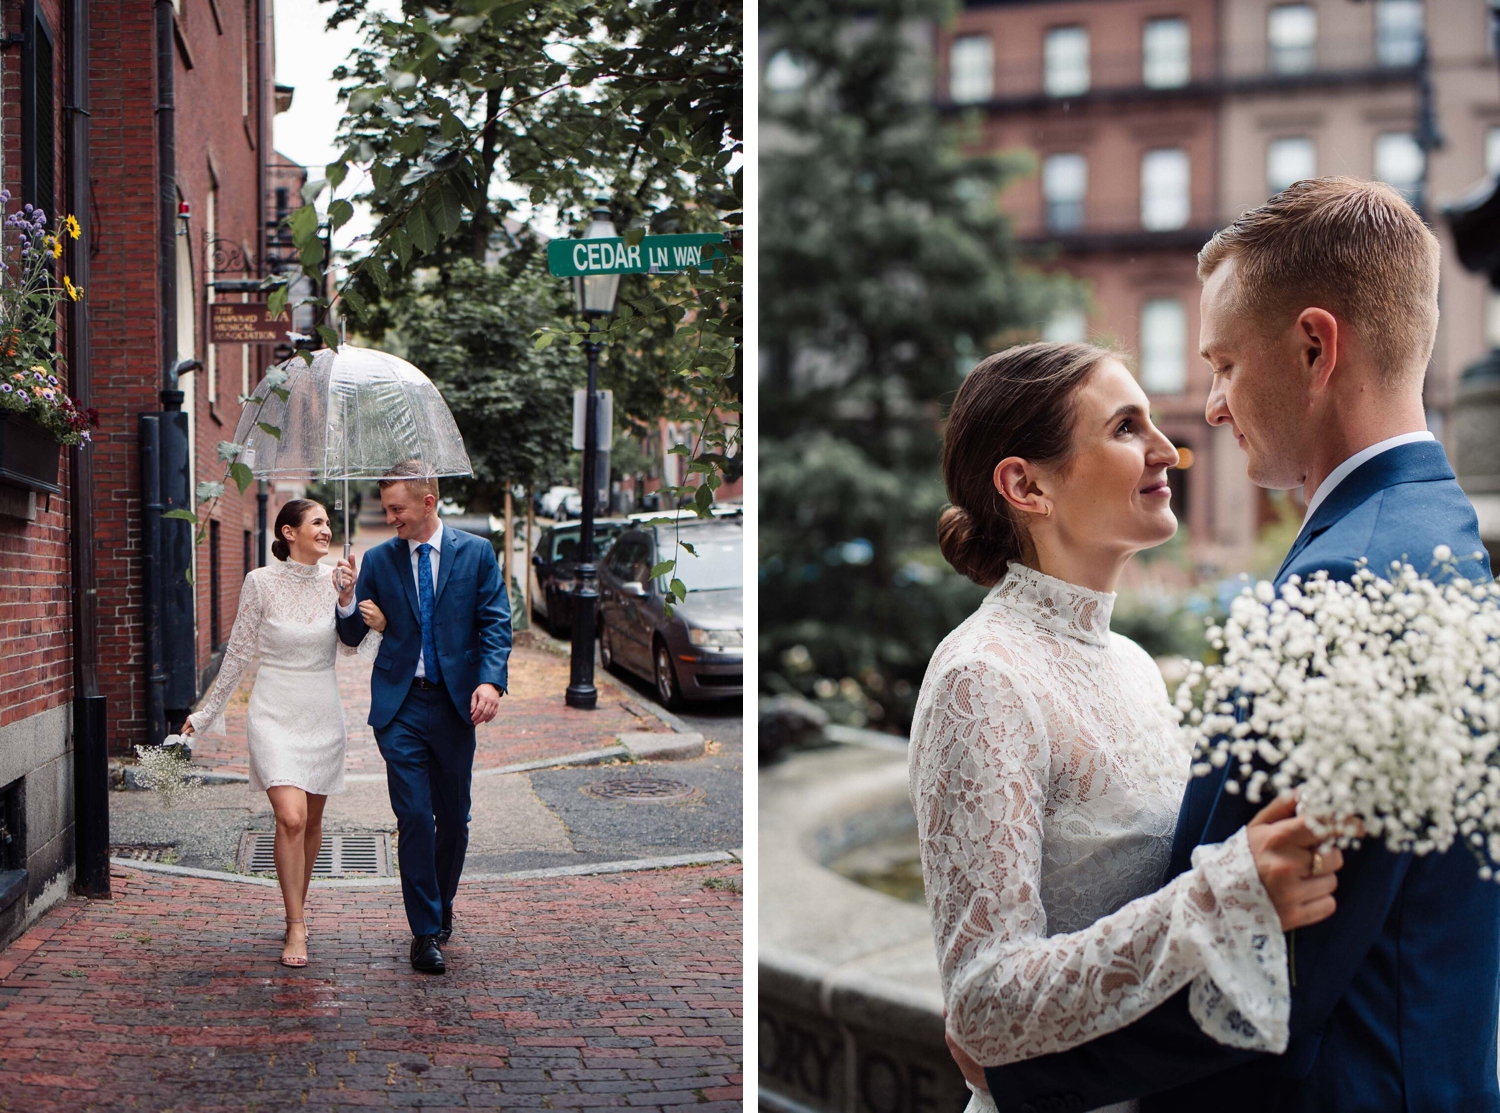 Downtown Boston couples portraits after an elopement